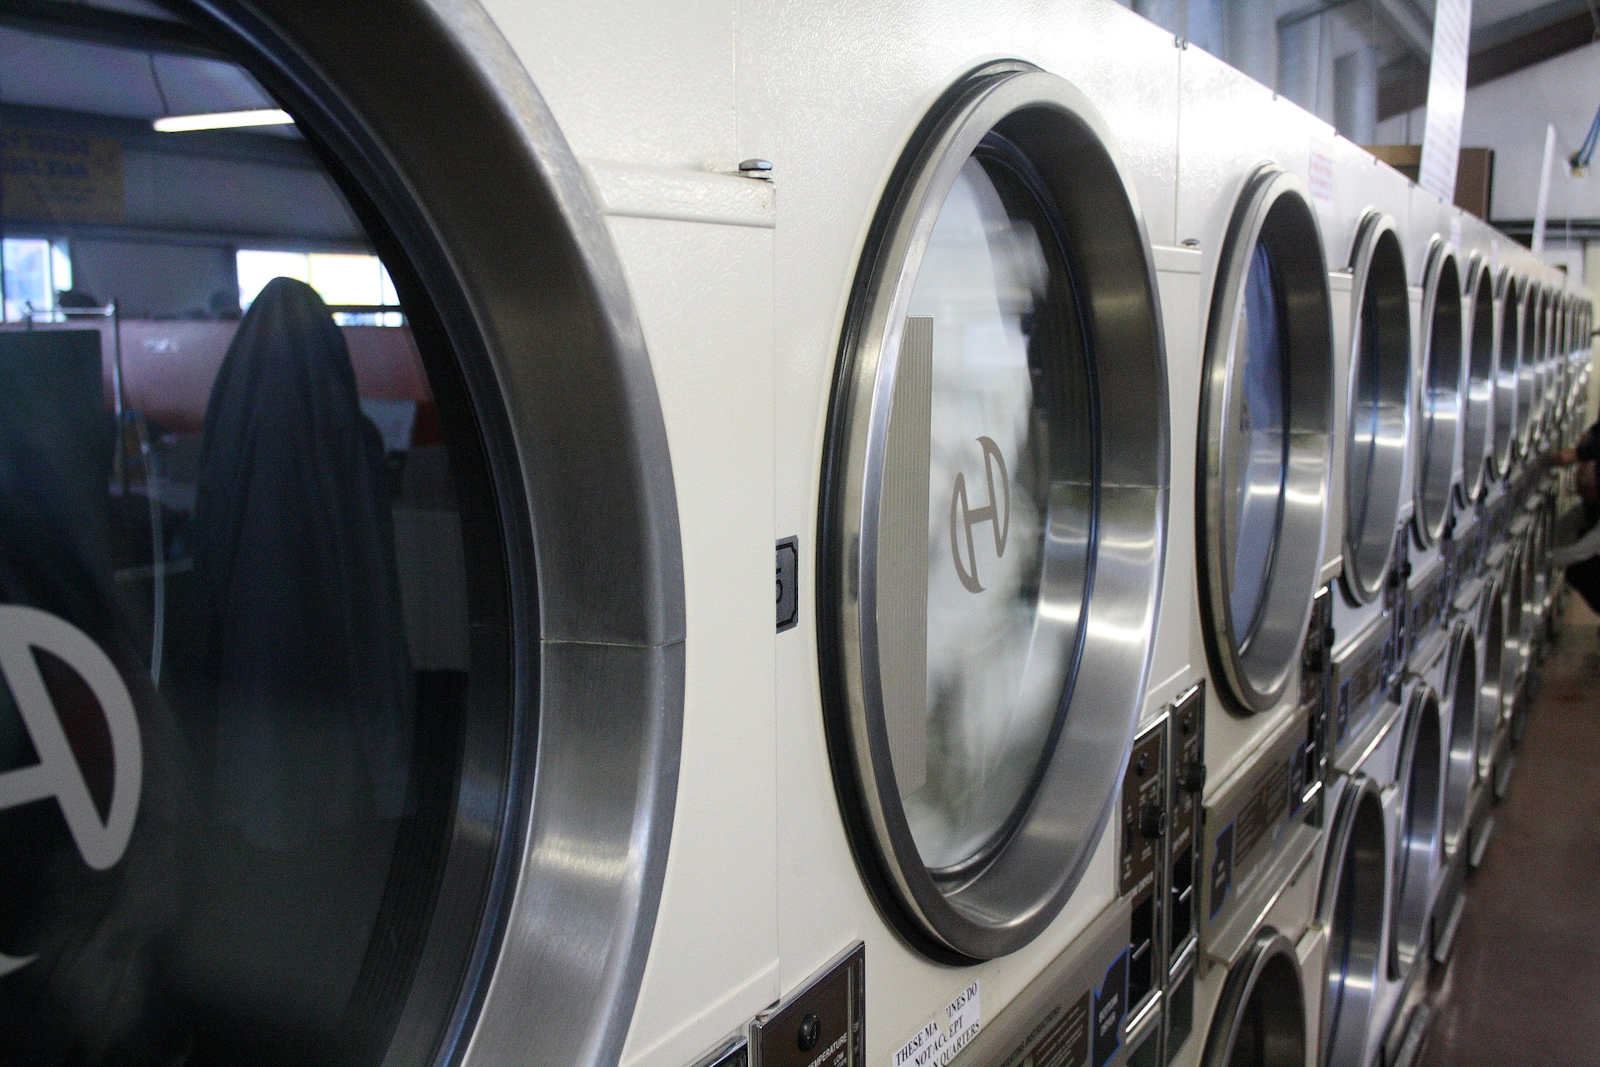 We’ll Wash Laundromat in Laredo